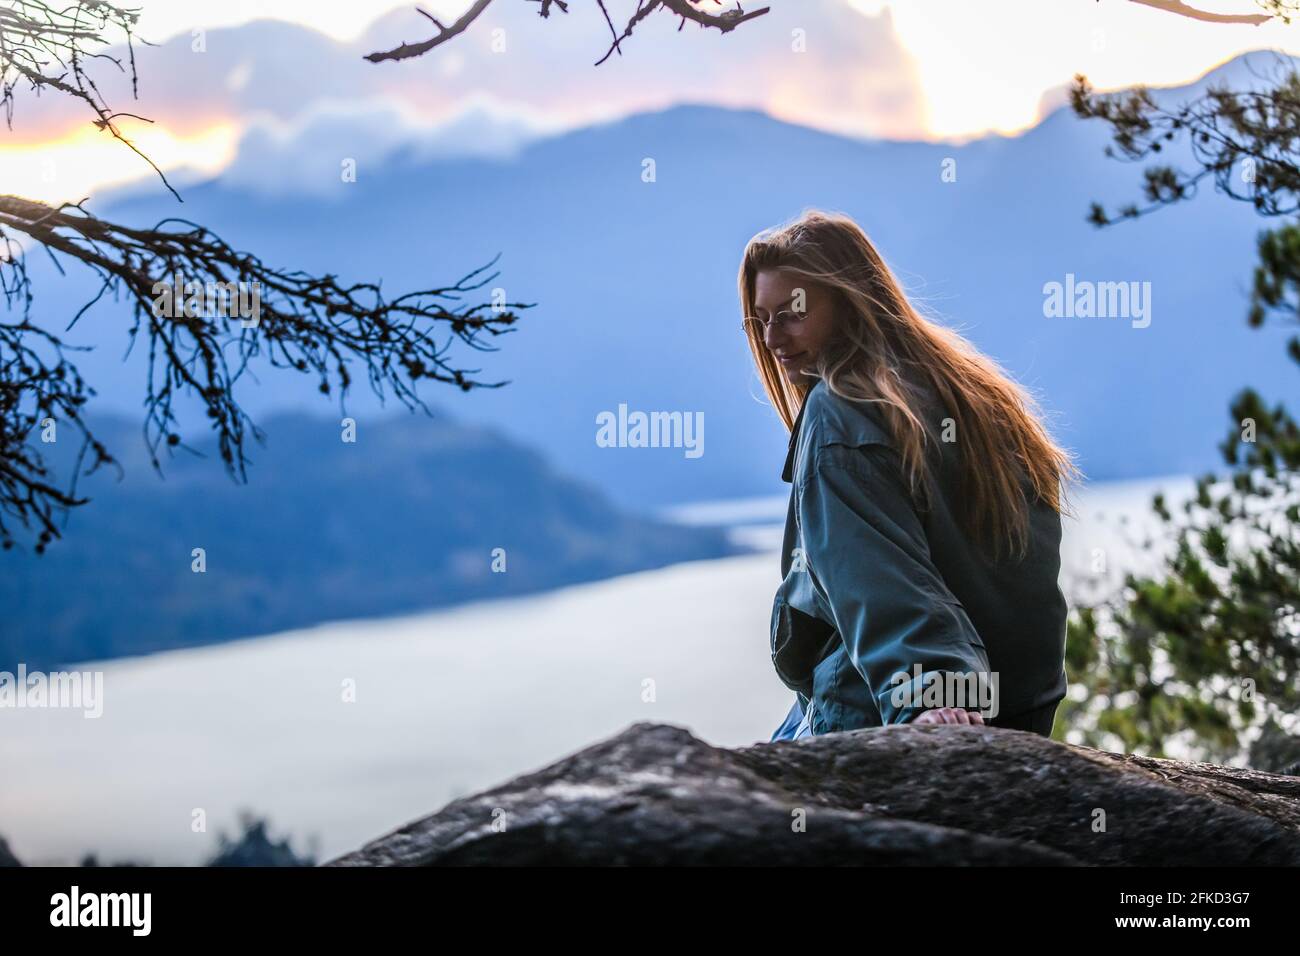 Canada, British Columbia, Squamish, Young woman sitting on rock Stock Photo